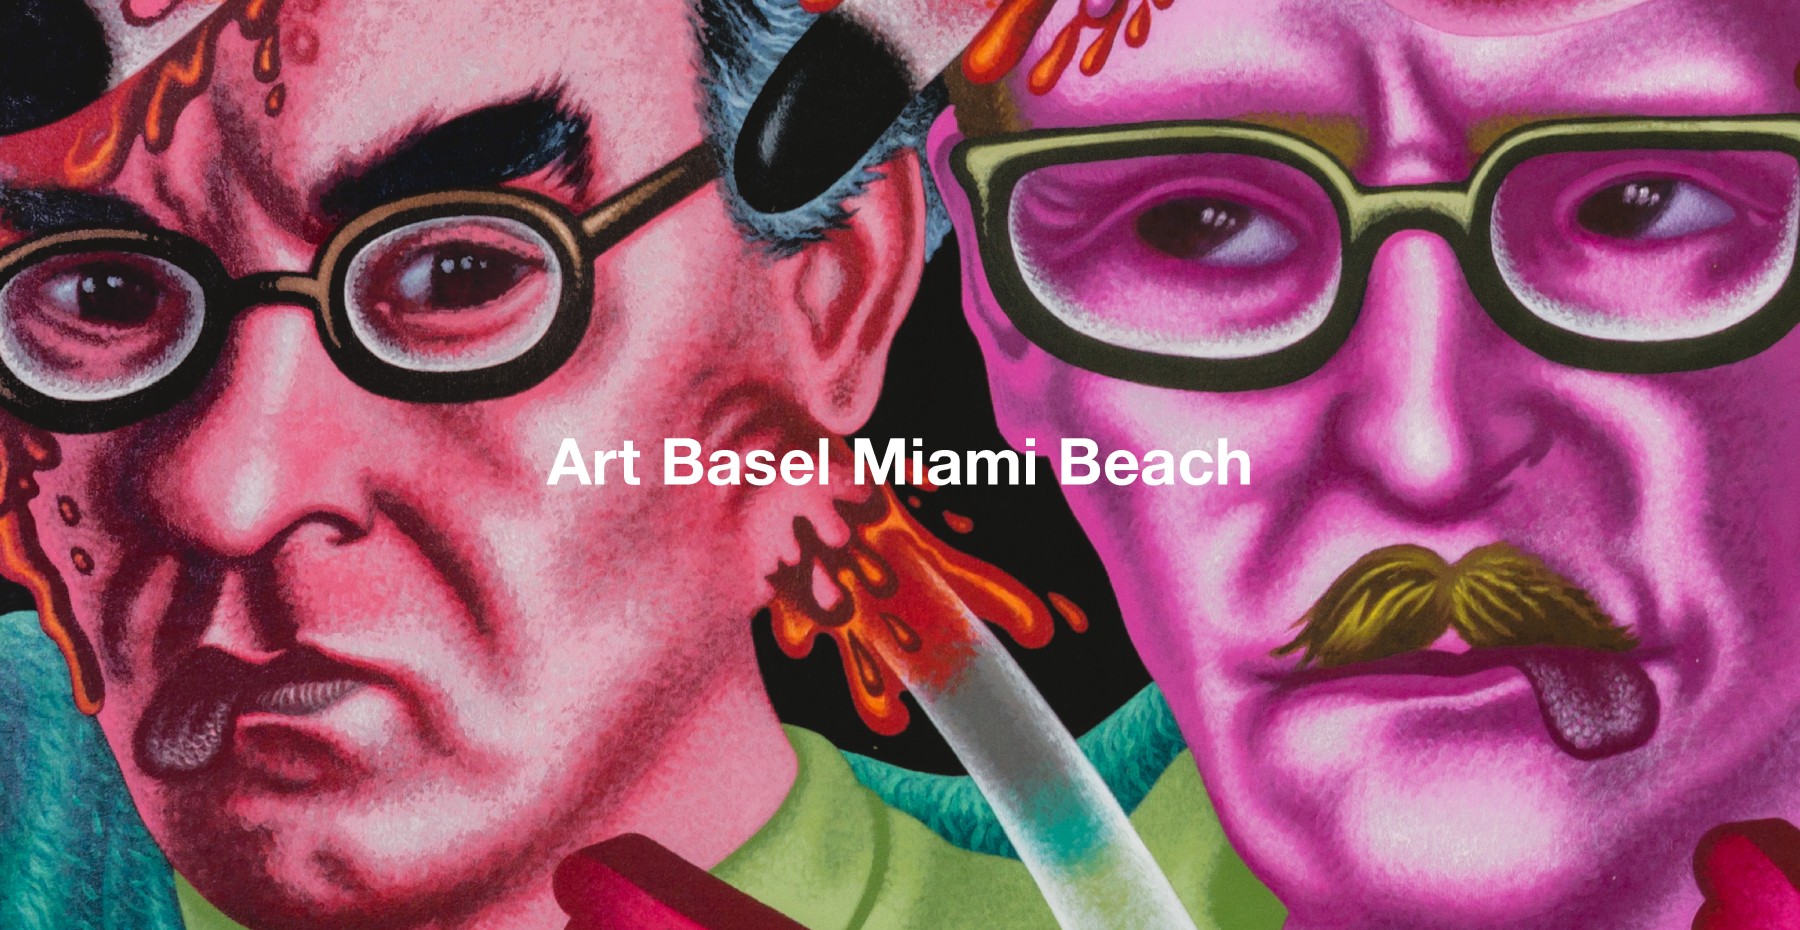 Art Basel Miami Beach
November 29 &amp;ndash; December 3, 2022
Booth F5

Image Link